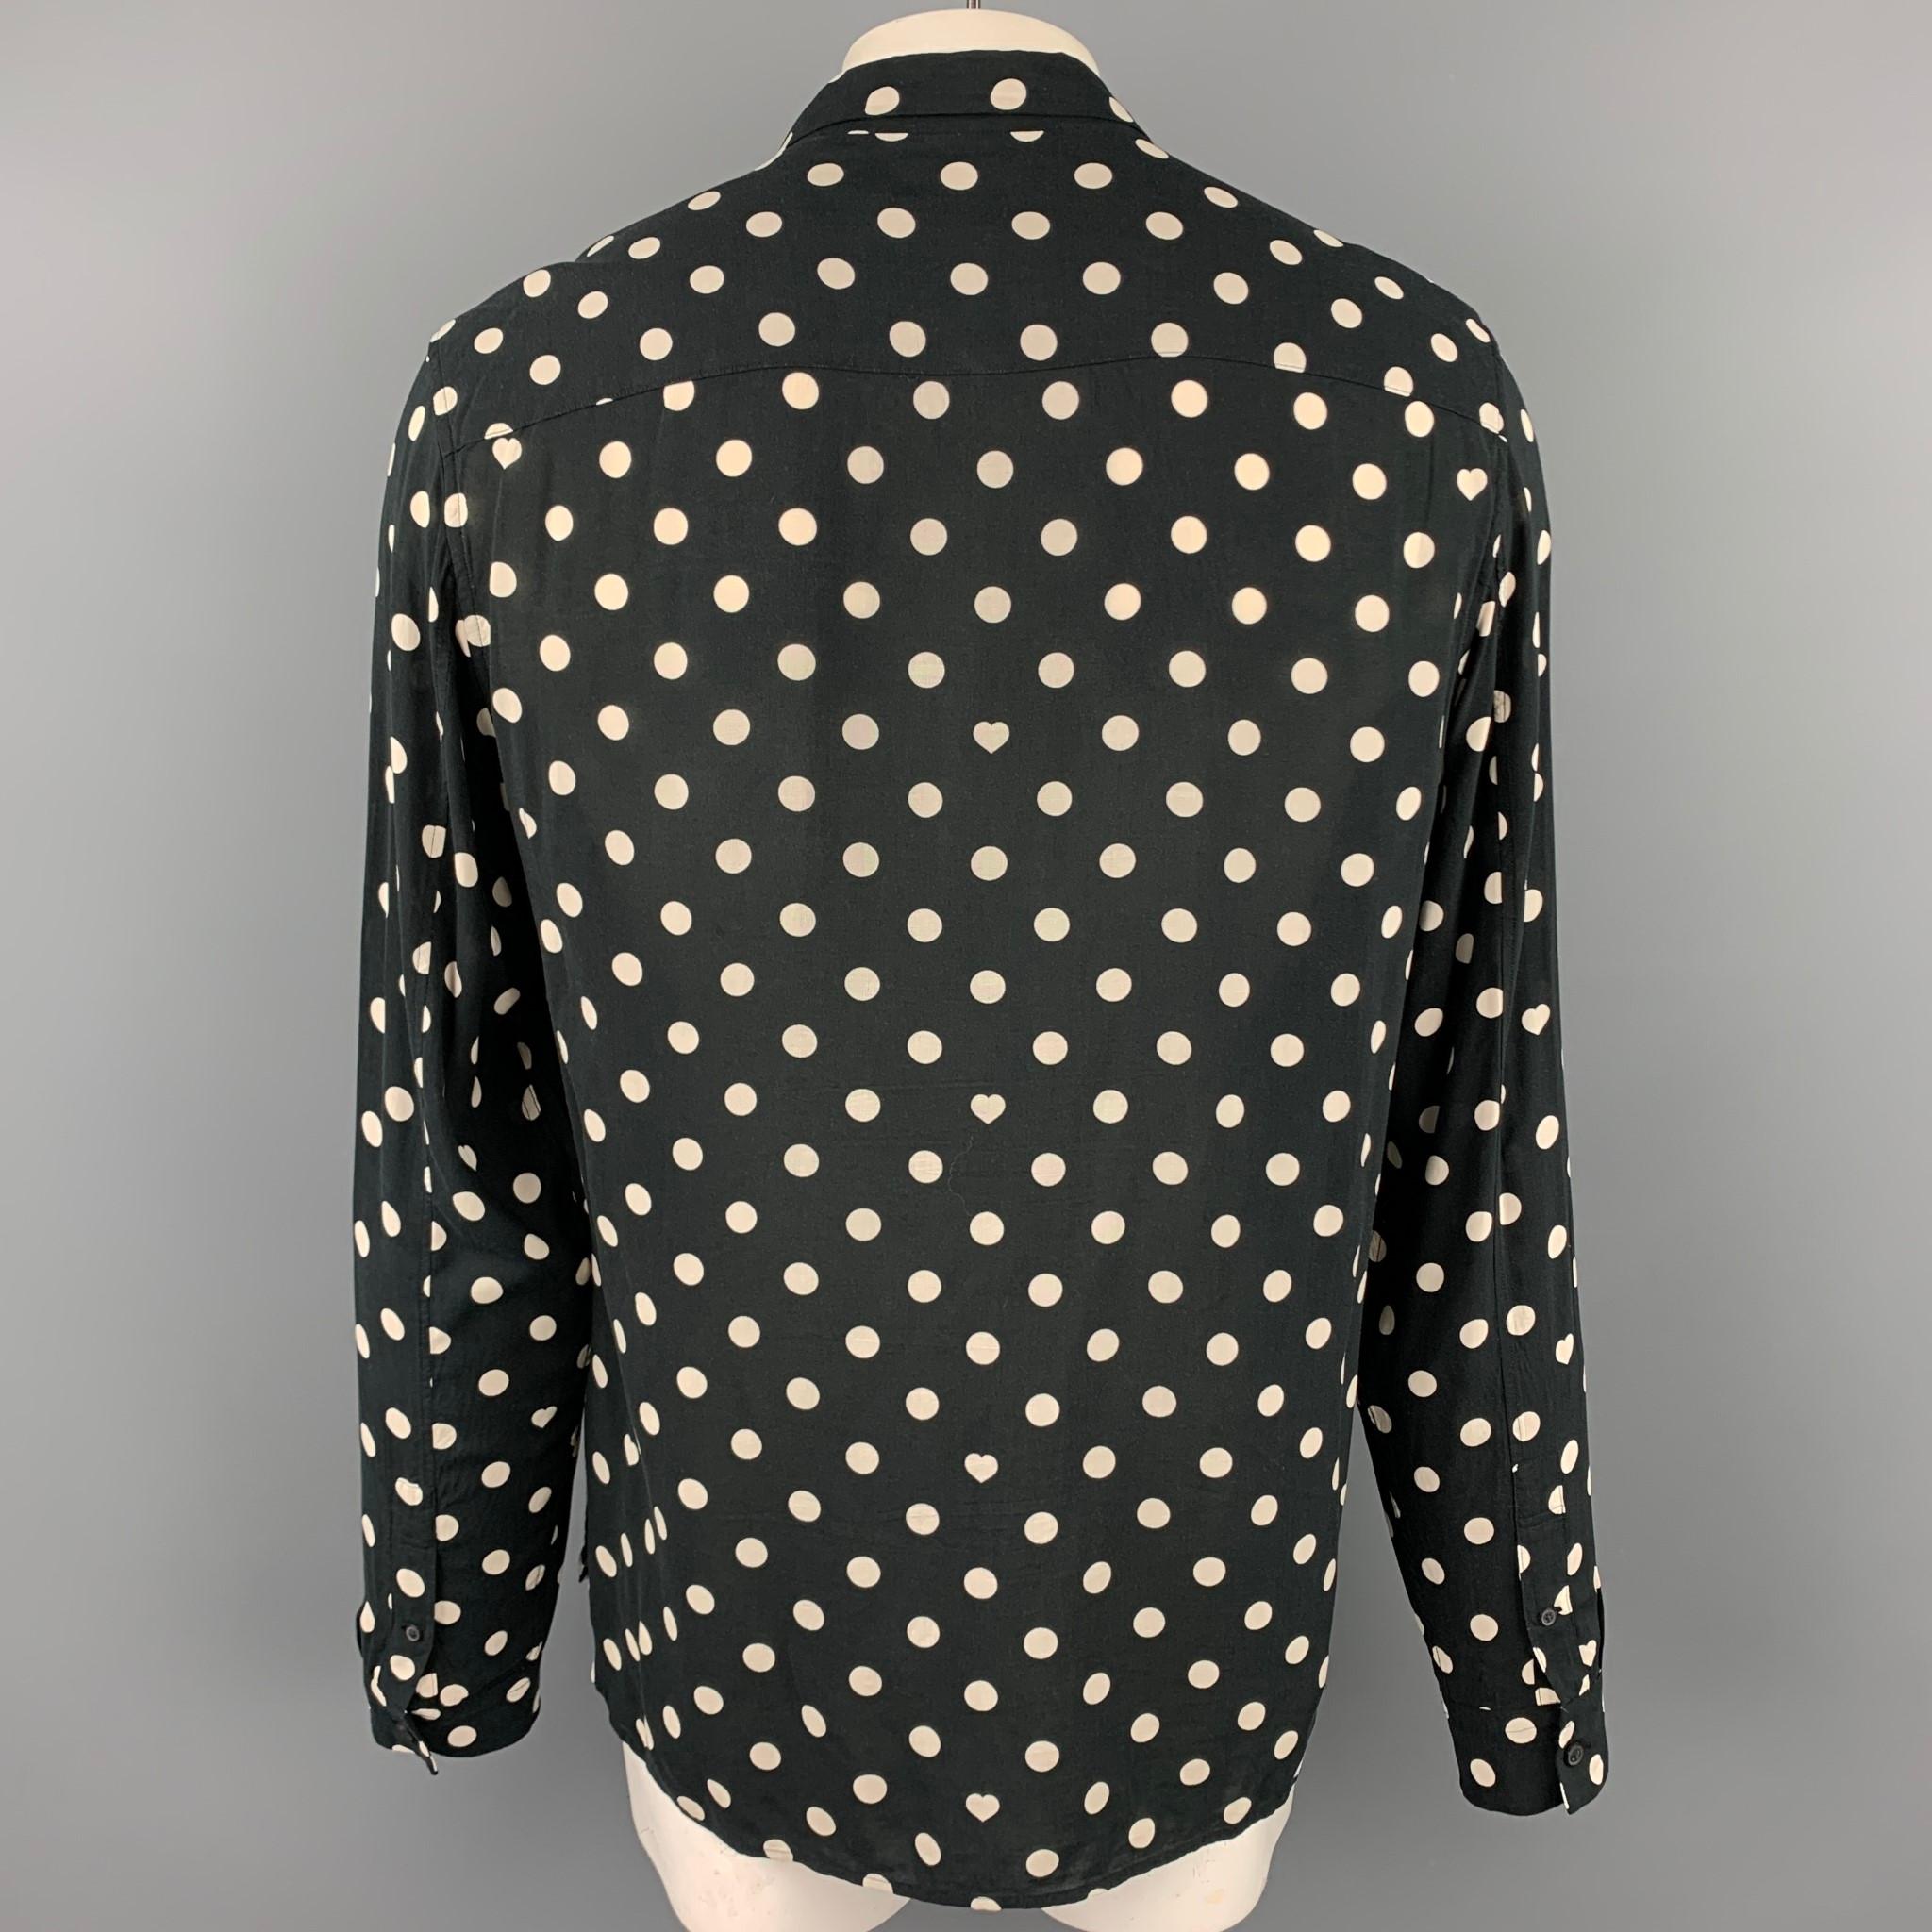 black and white polka dot shirt